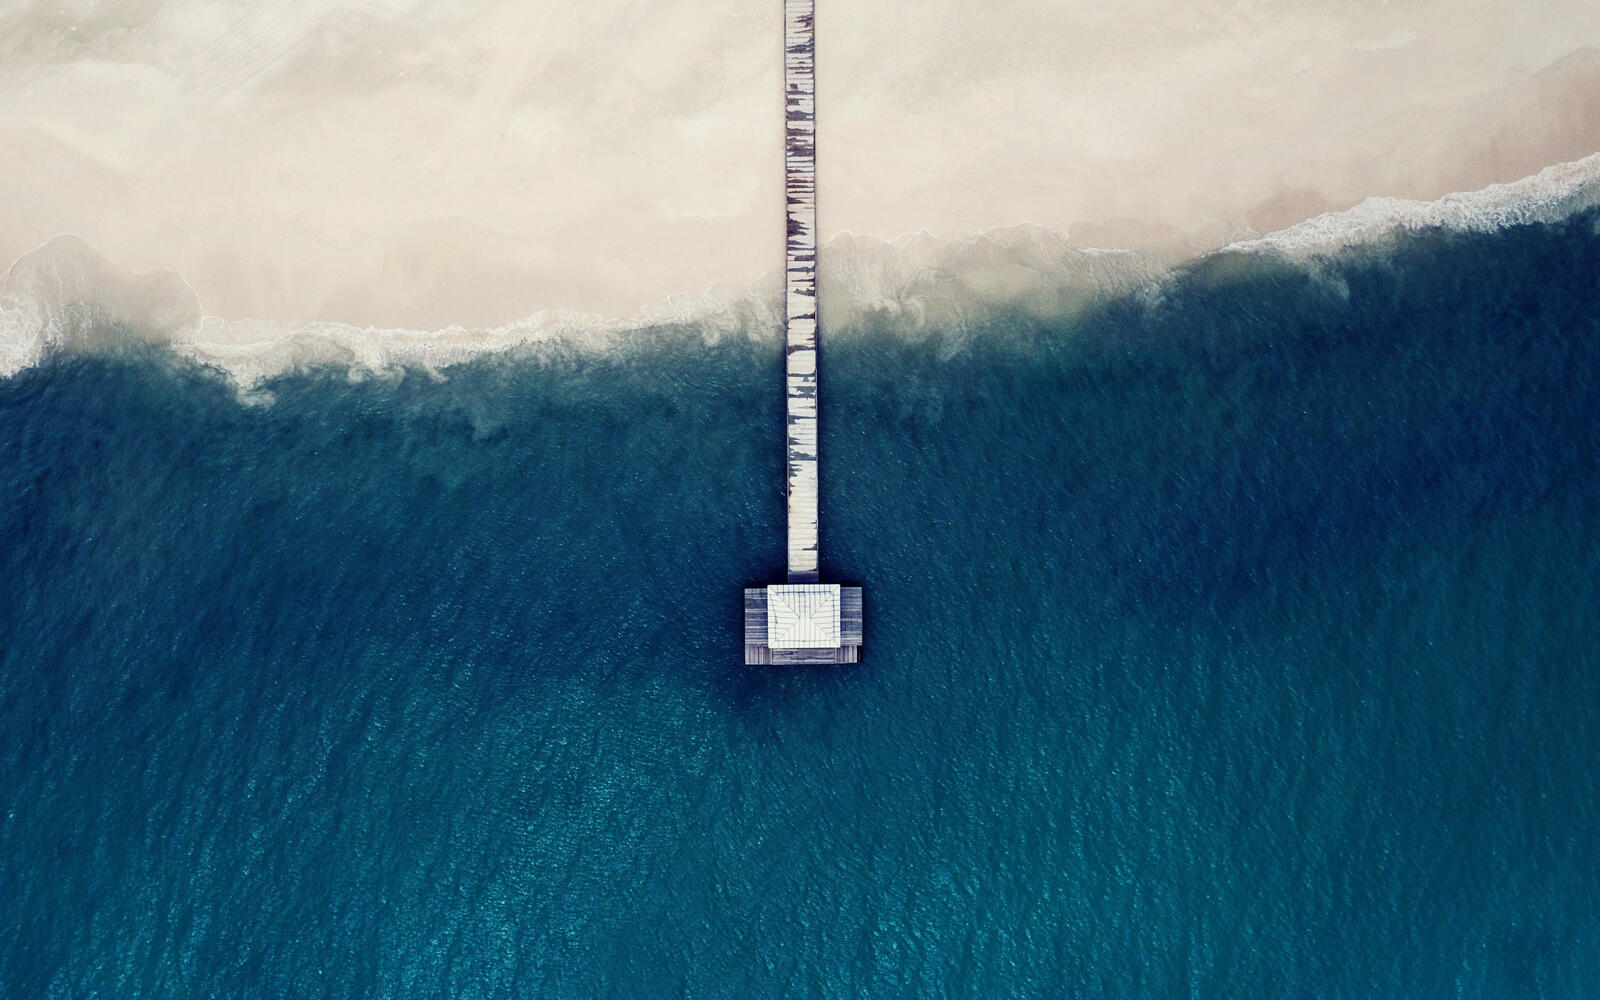 Wallpapers wallpaper pier view from the top ocean on the desktop